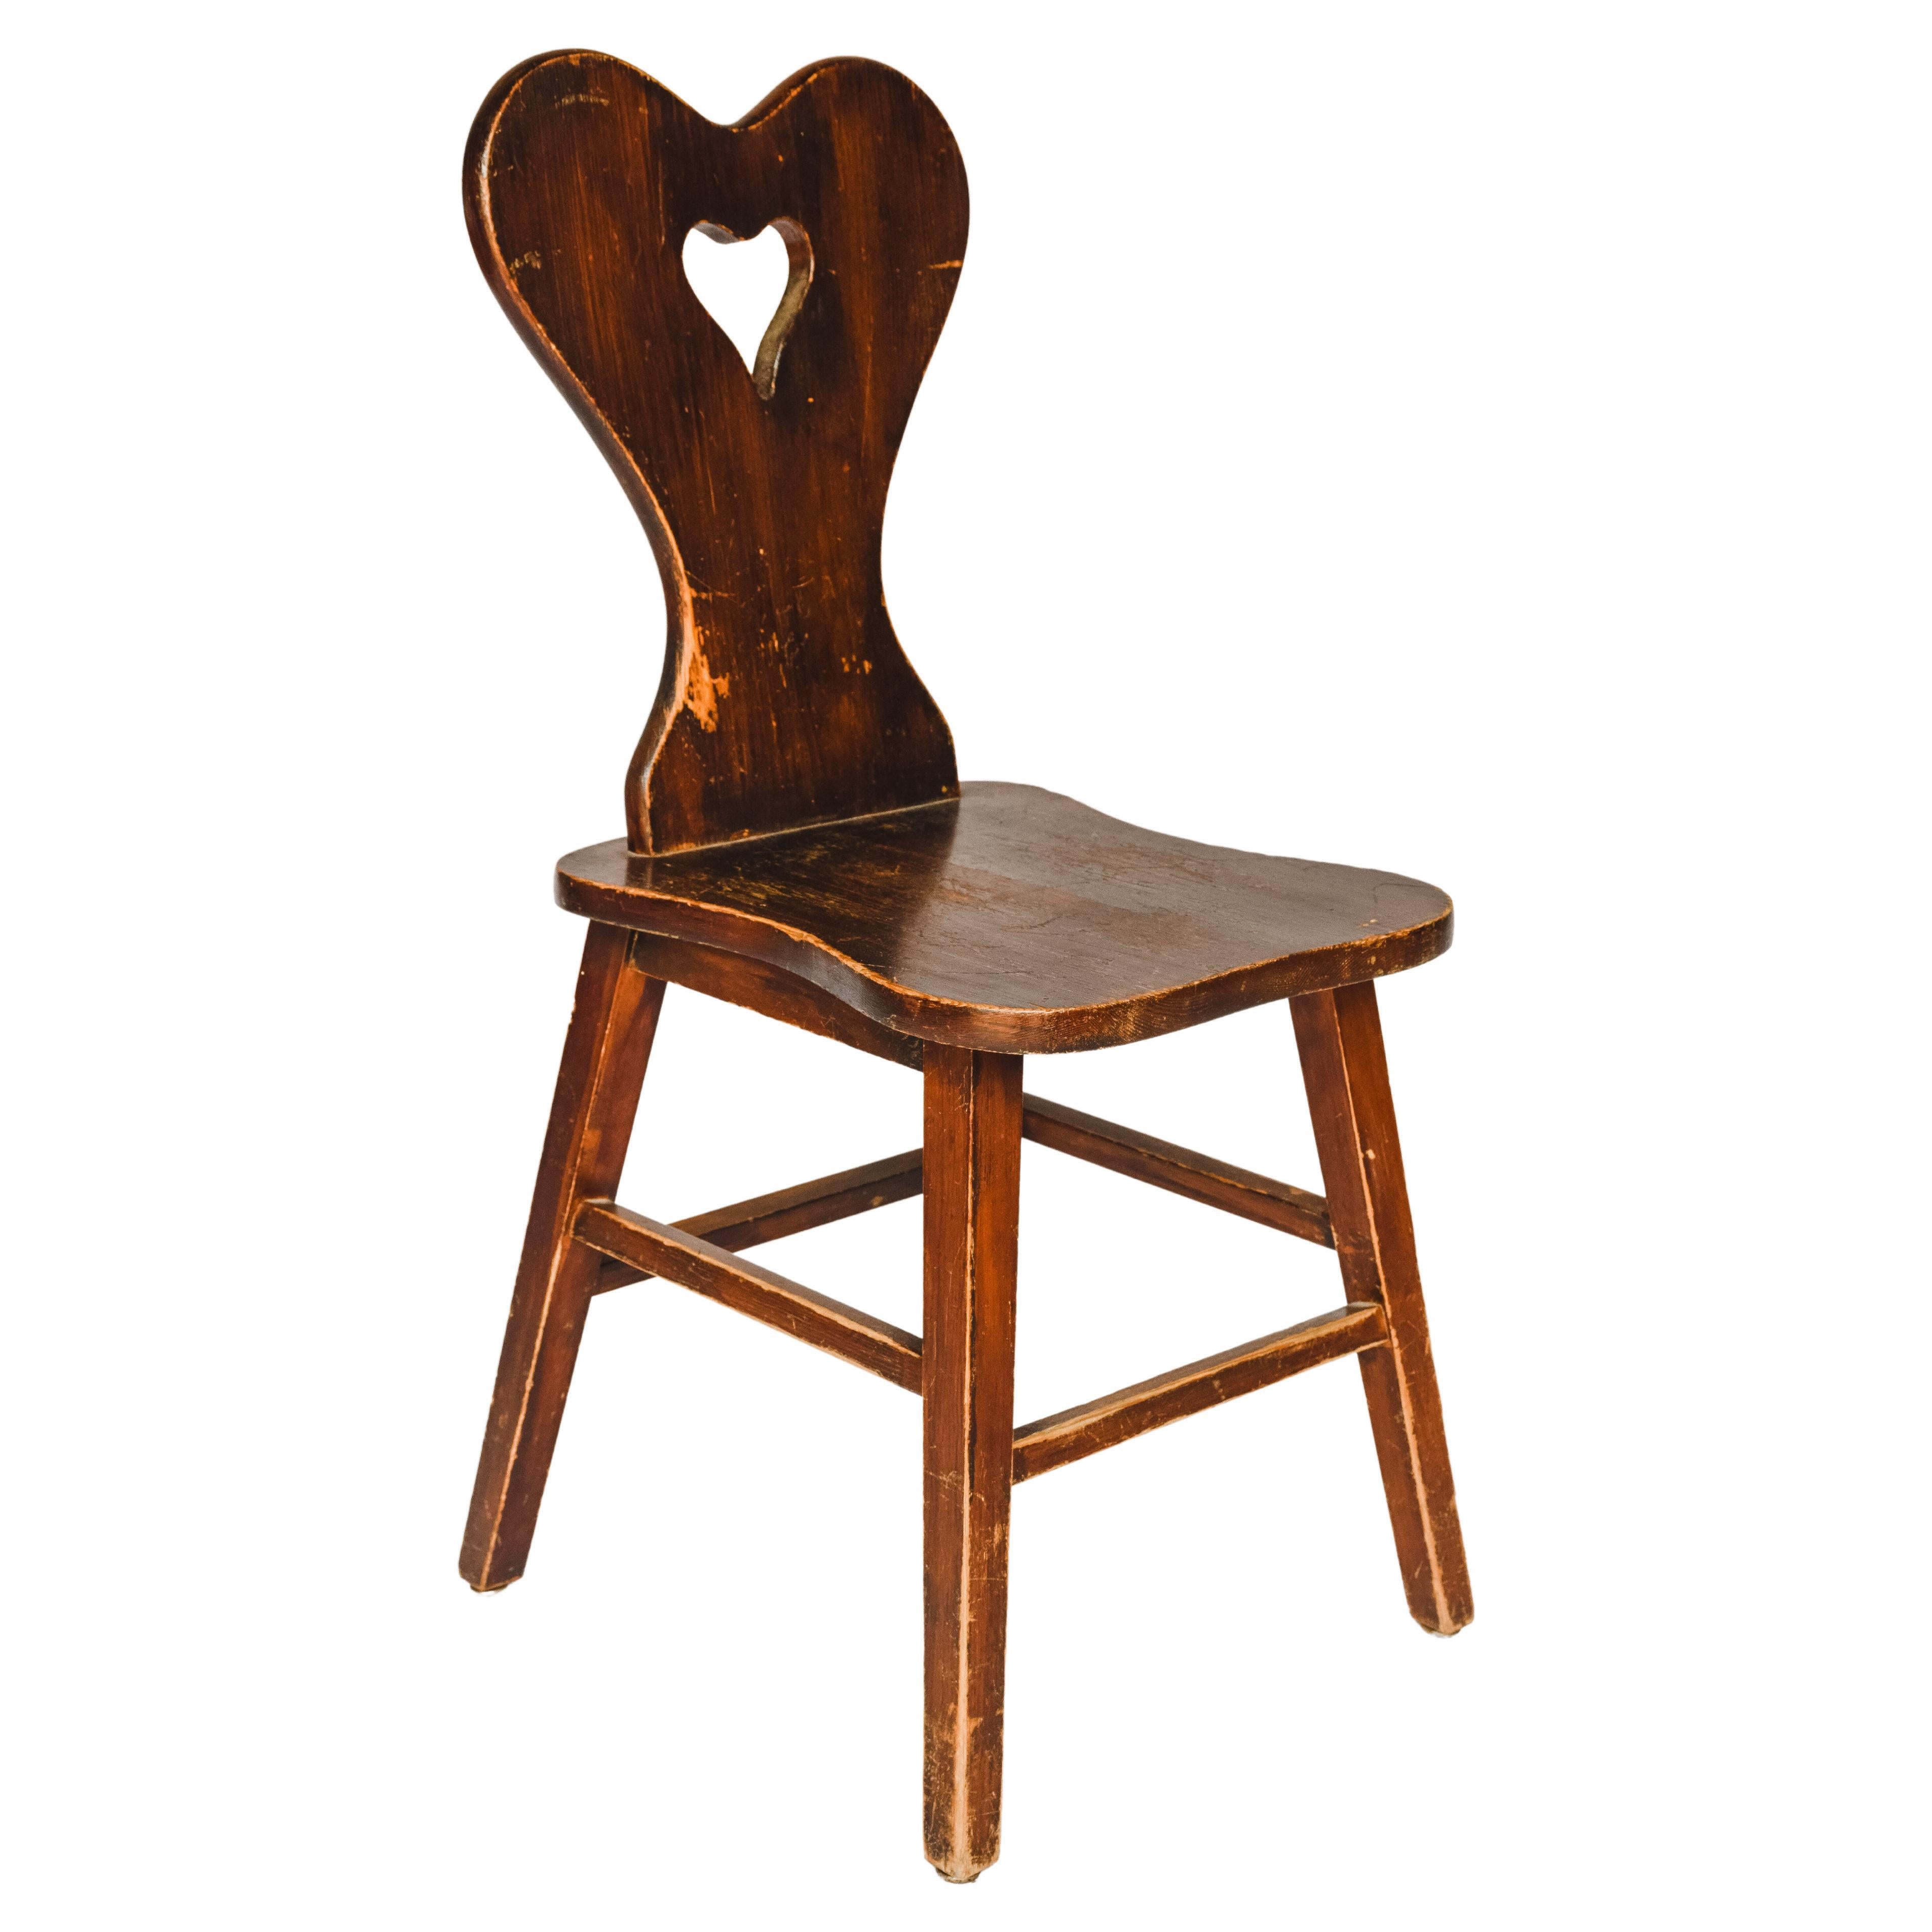 Wooden Heart Shaped Chair